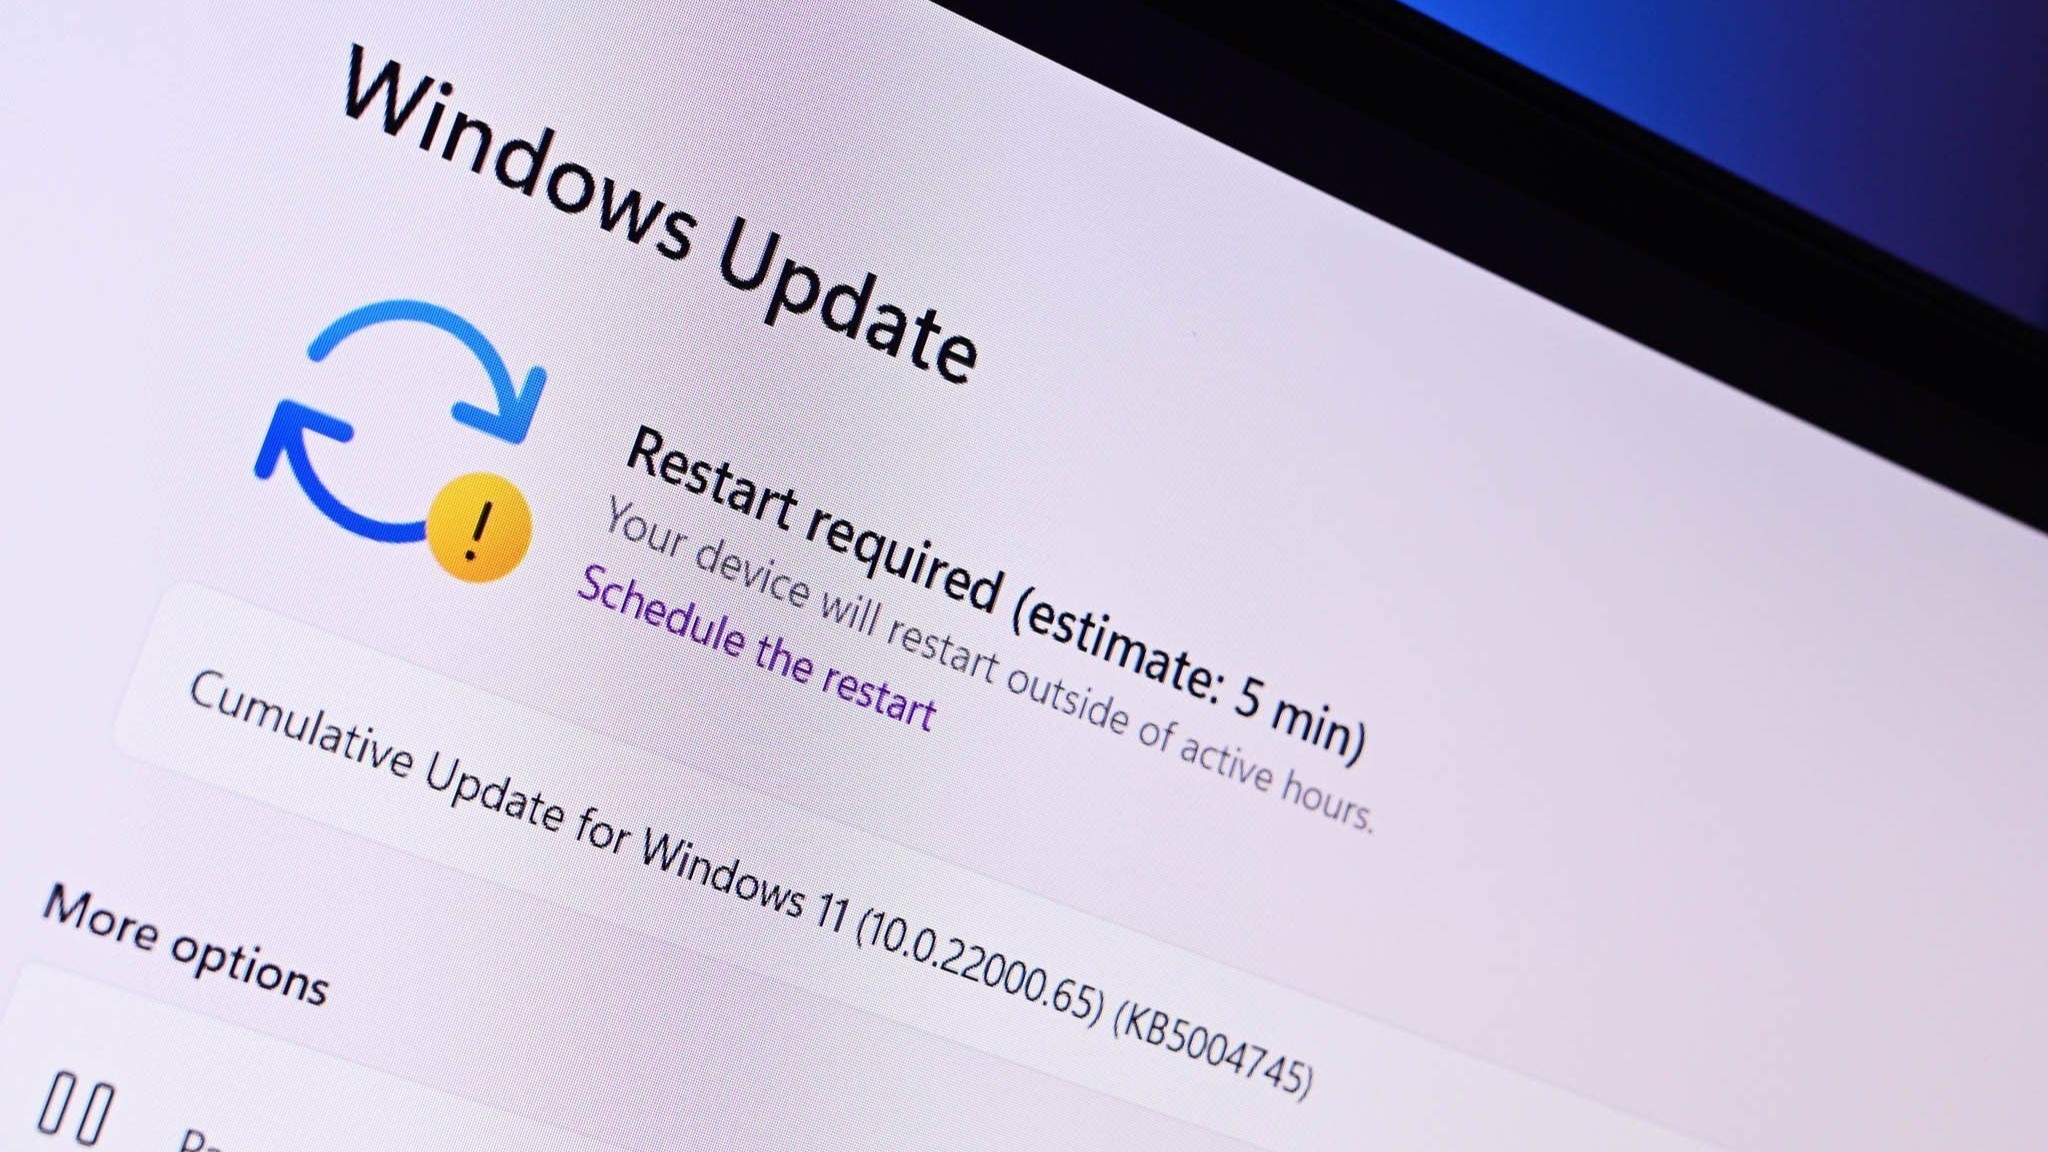 Windows 11 Update in Settings app